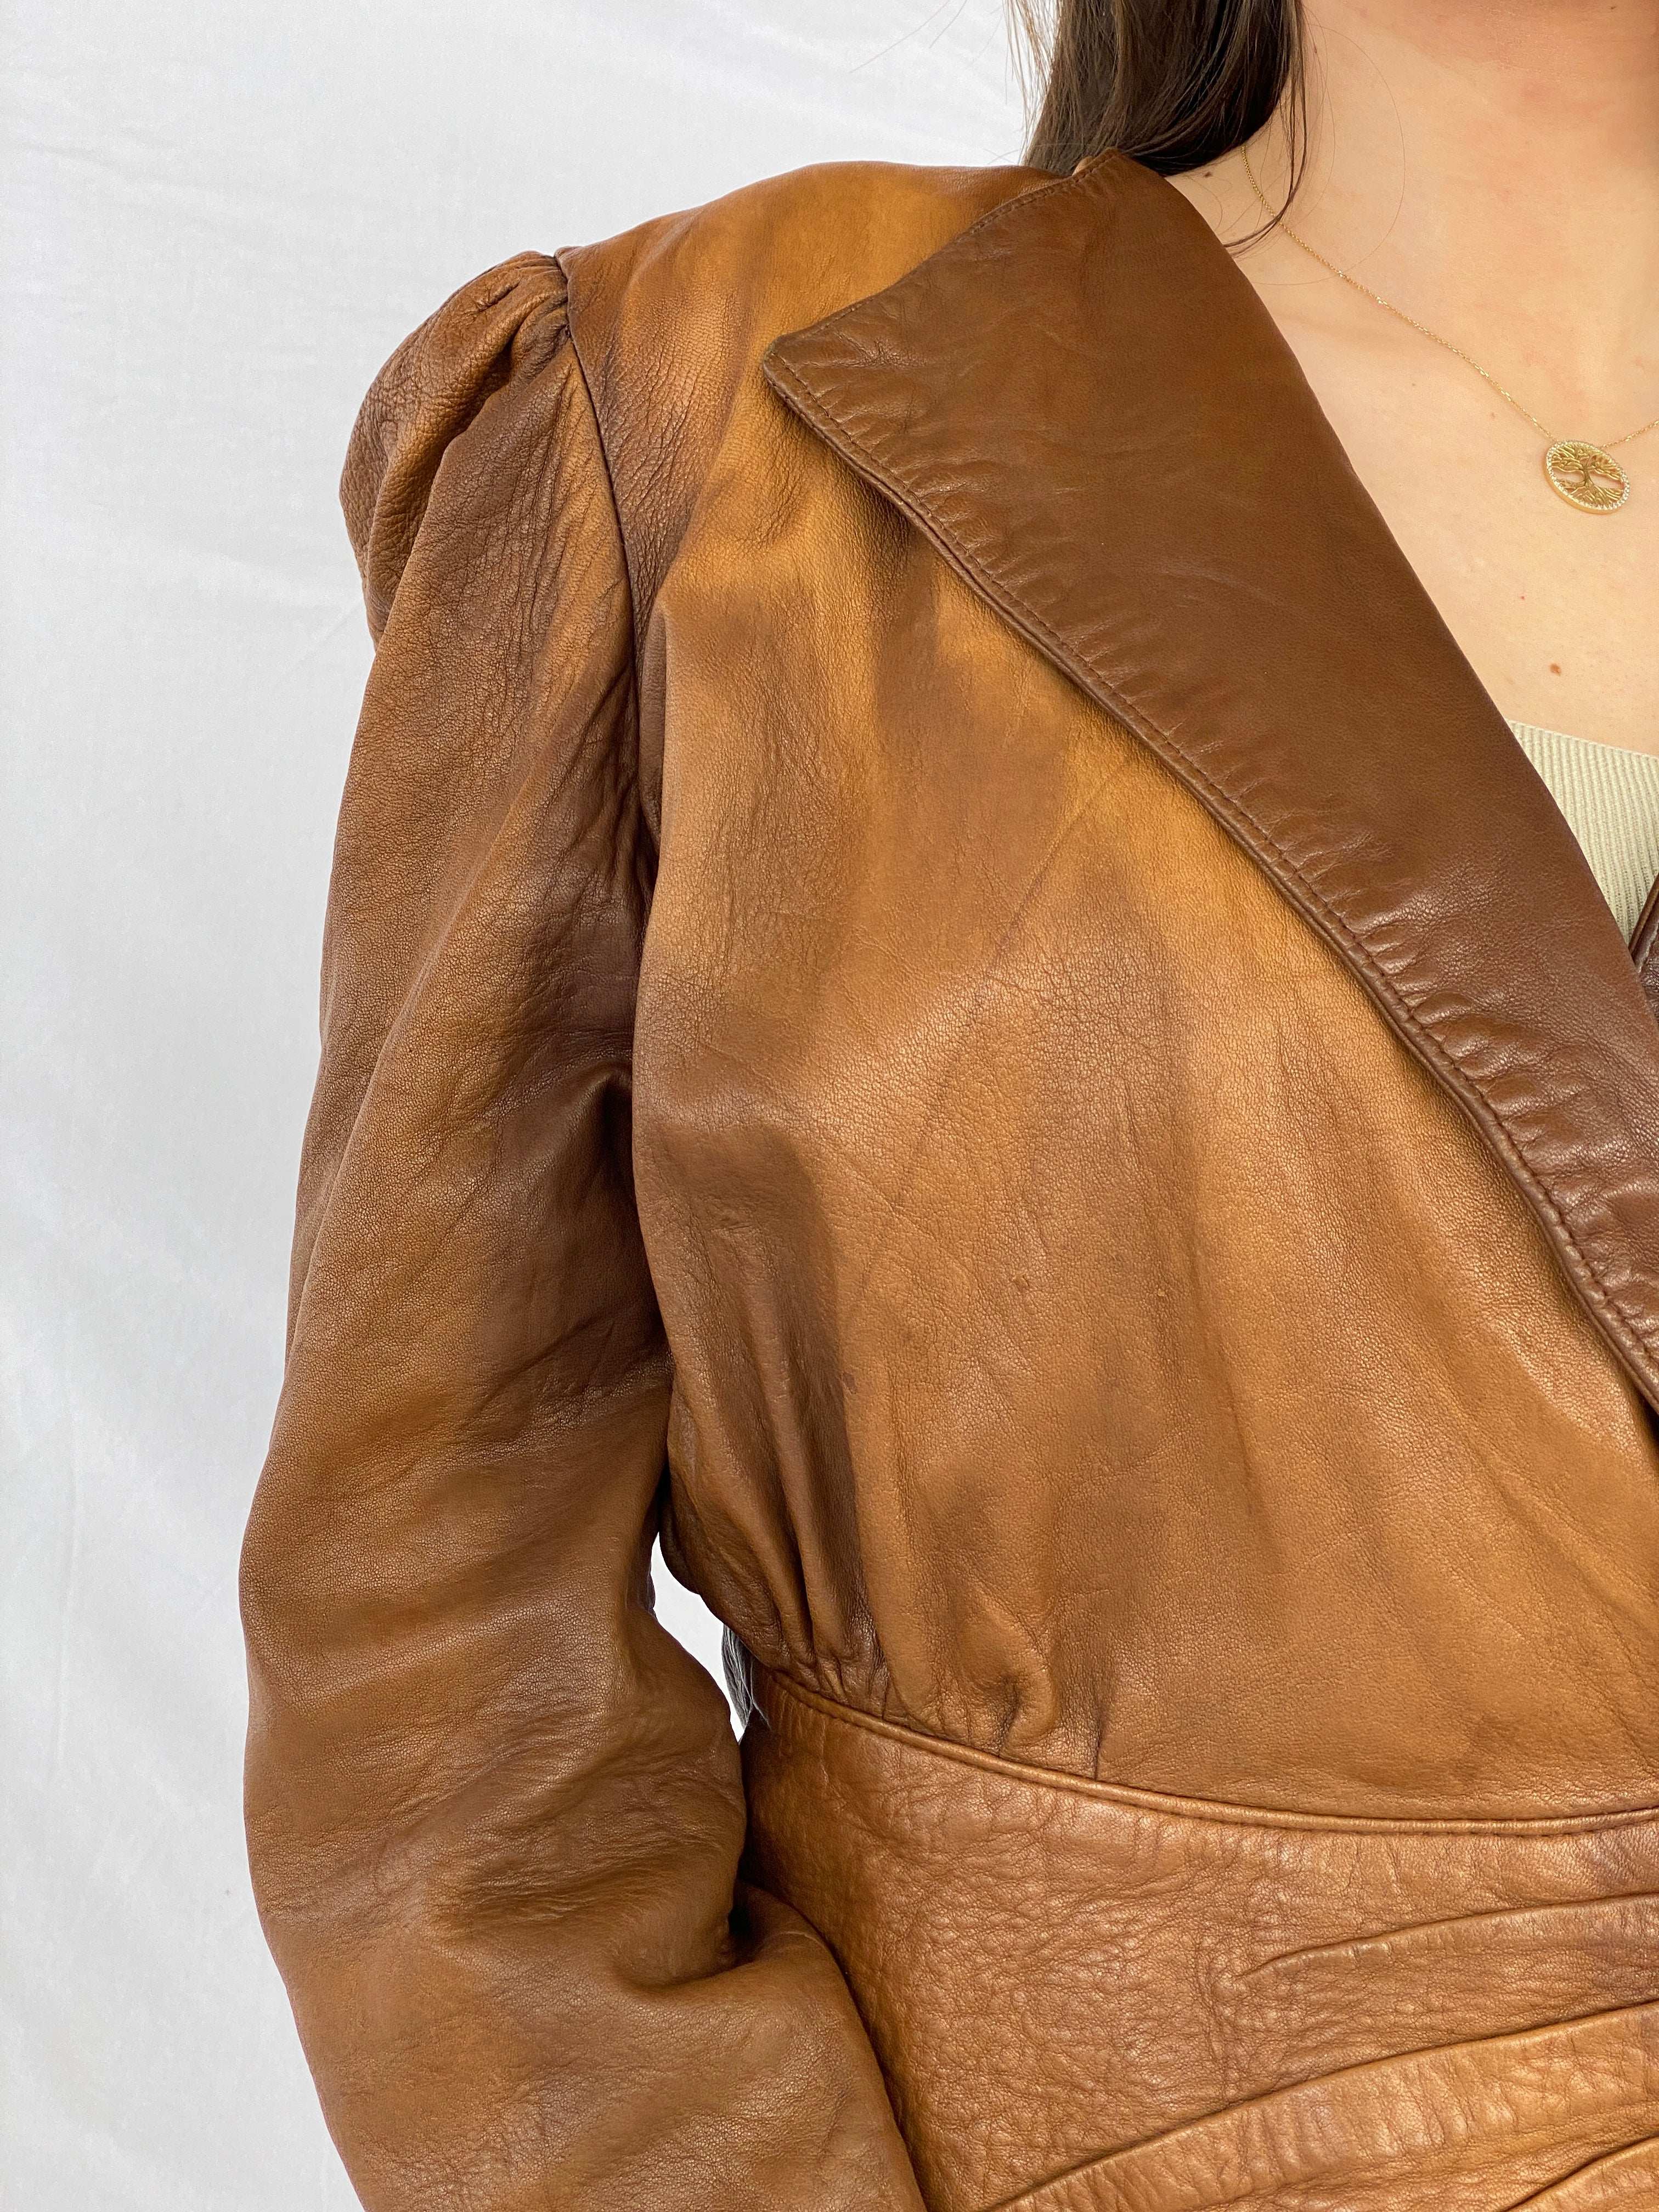 Statement Vintage Expresso Genuine Leather Jacket - Size M - Balagan Vintage Leather Jacket 00s, 90s, brown leather, genuine leather jacket, Mira, NEW IN